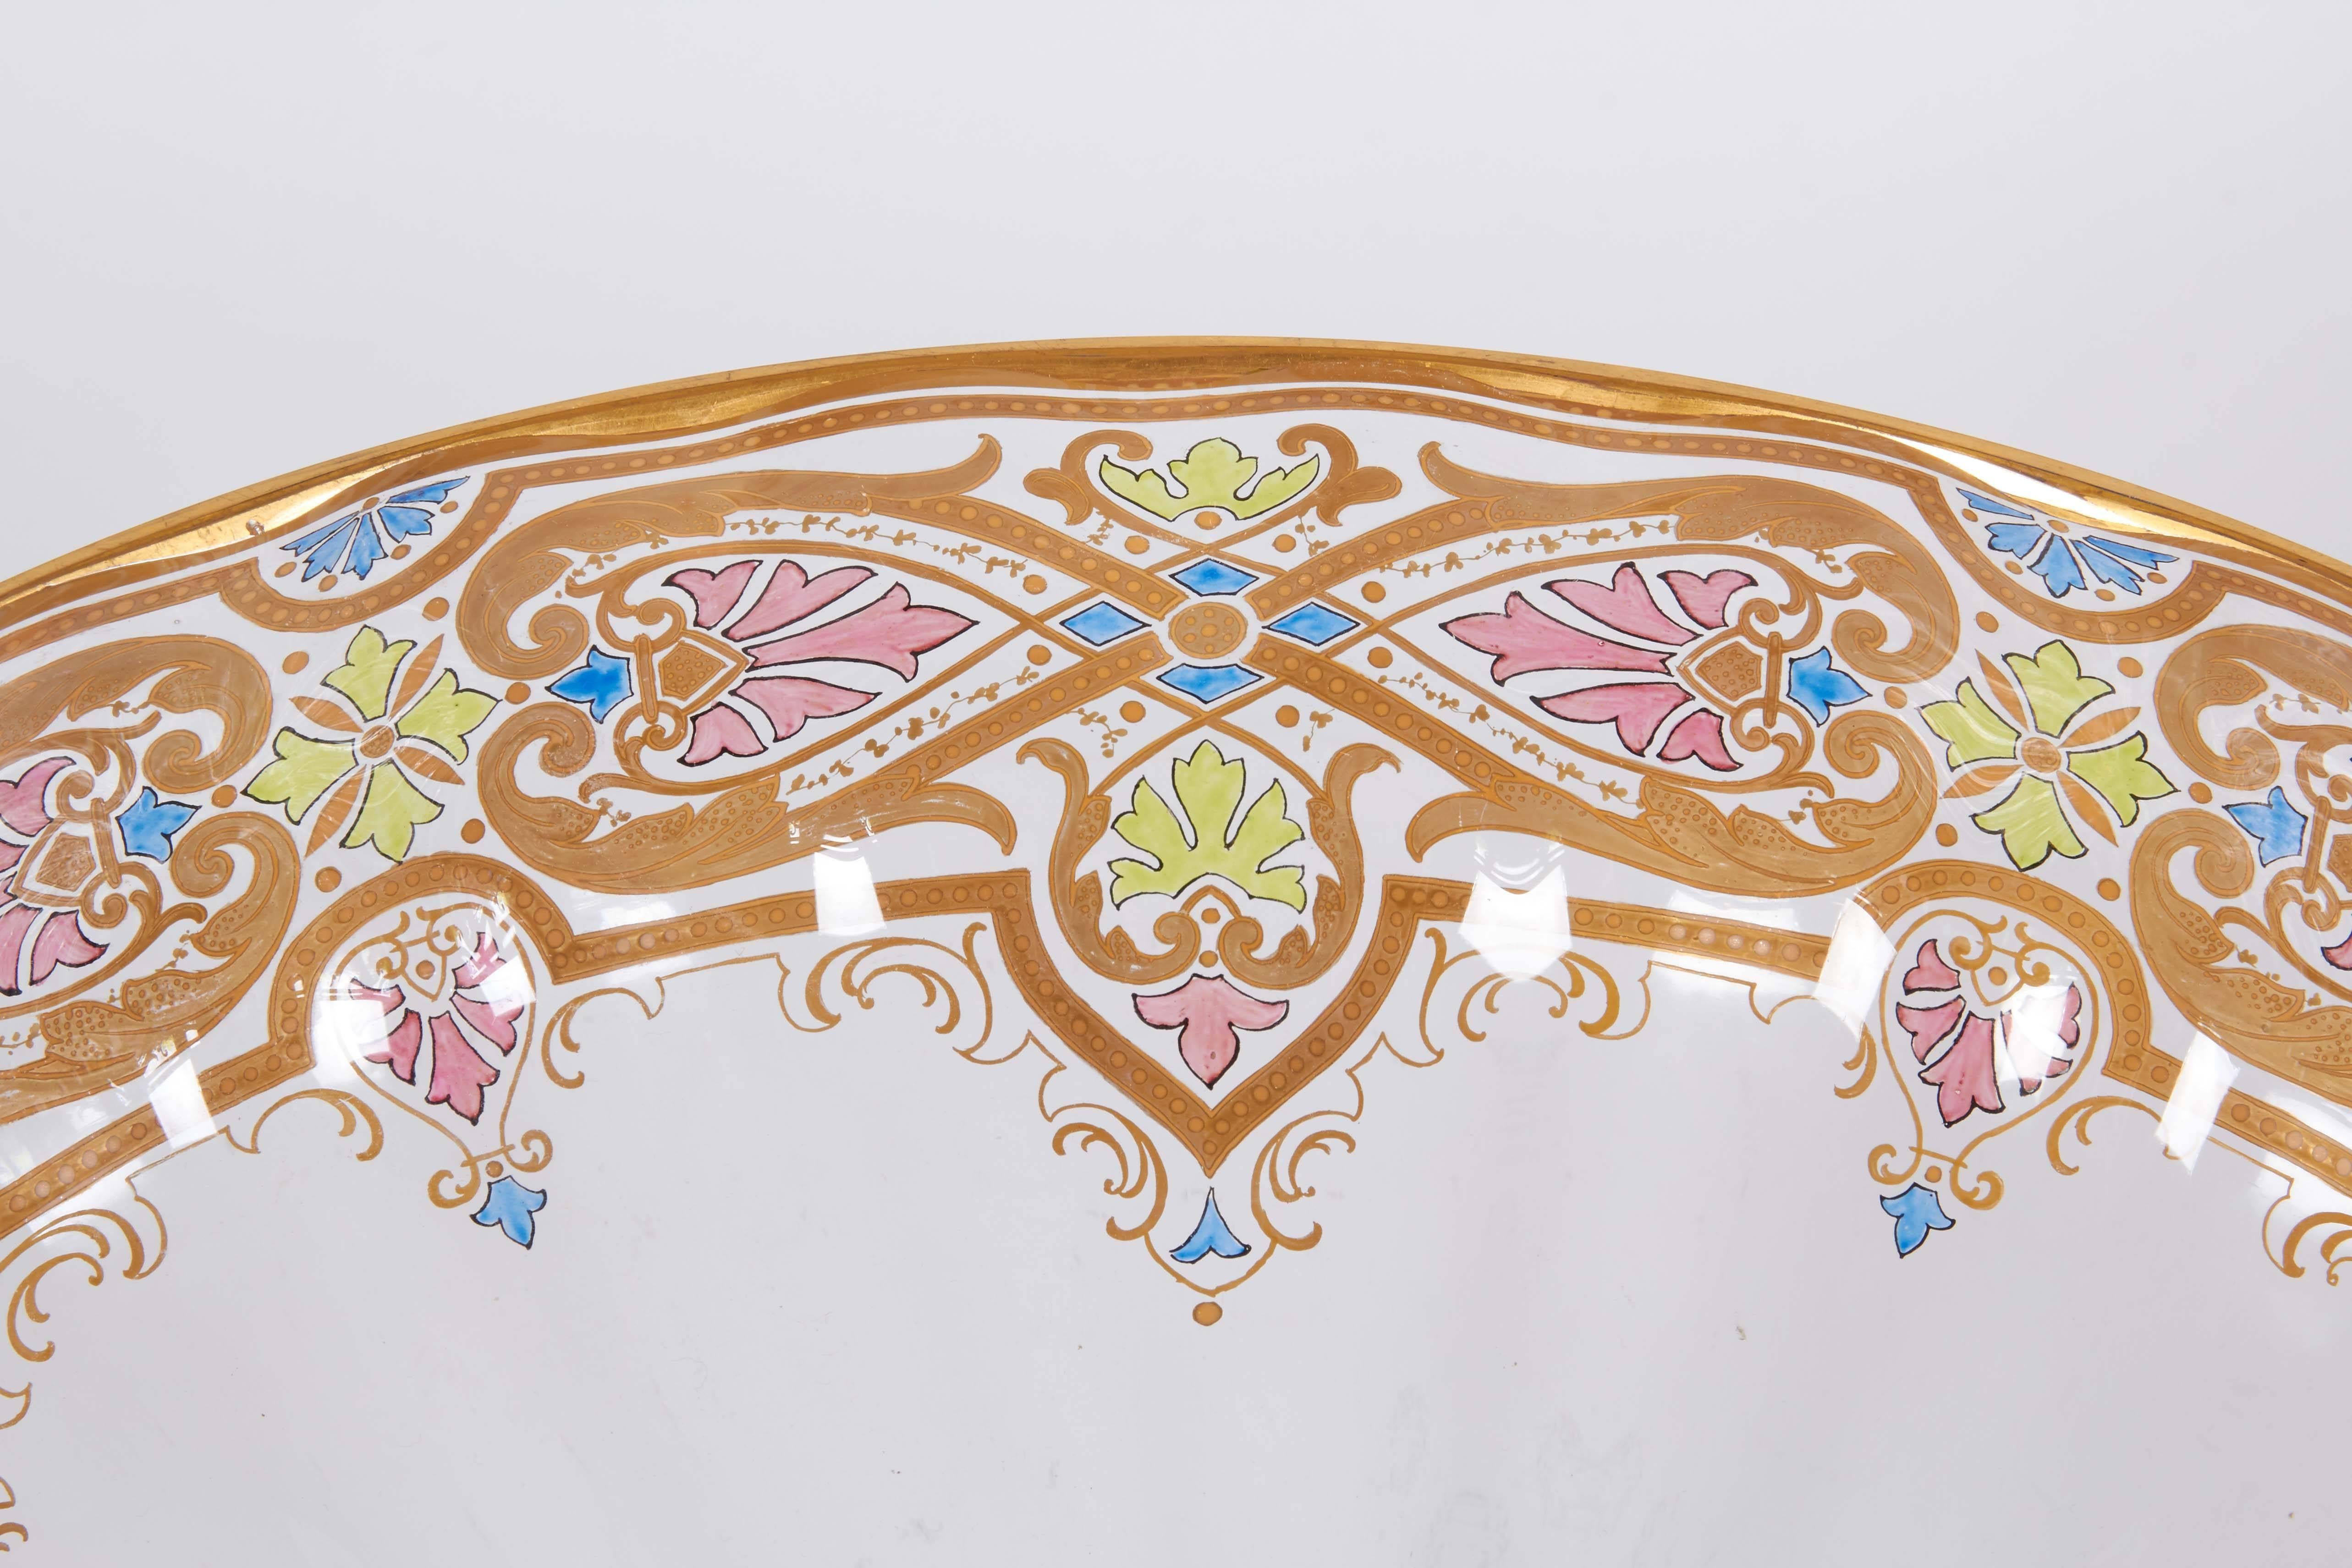 Czech Art Nouveau Centerpiece Punch Bowl Set with Blown Glass under Tray and 11 Cups